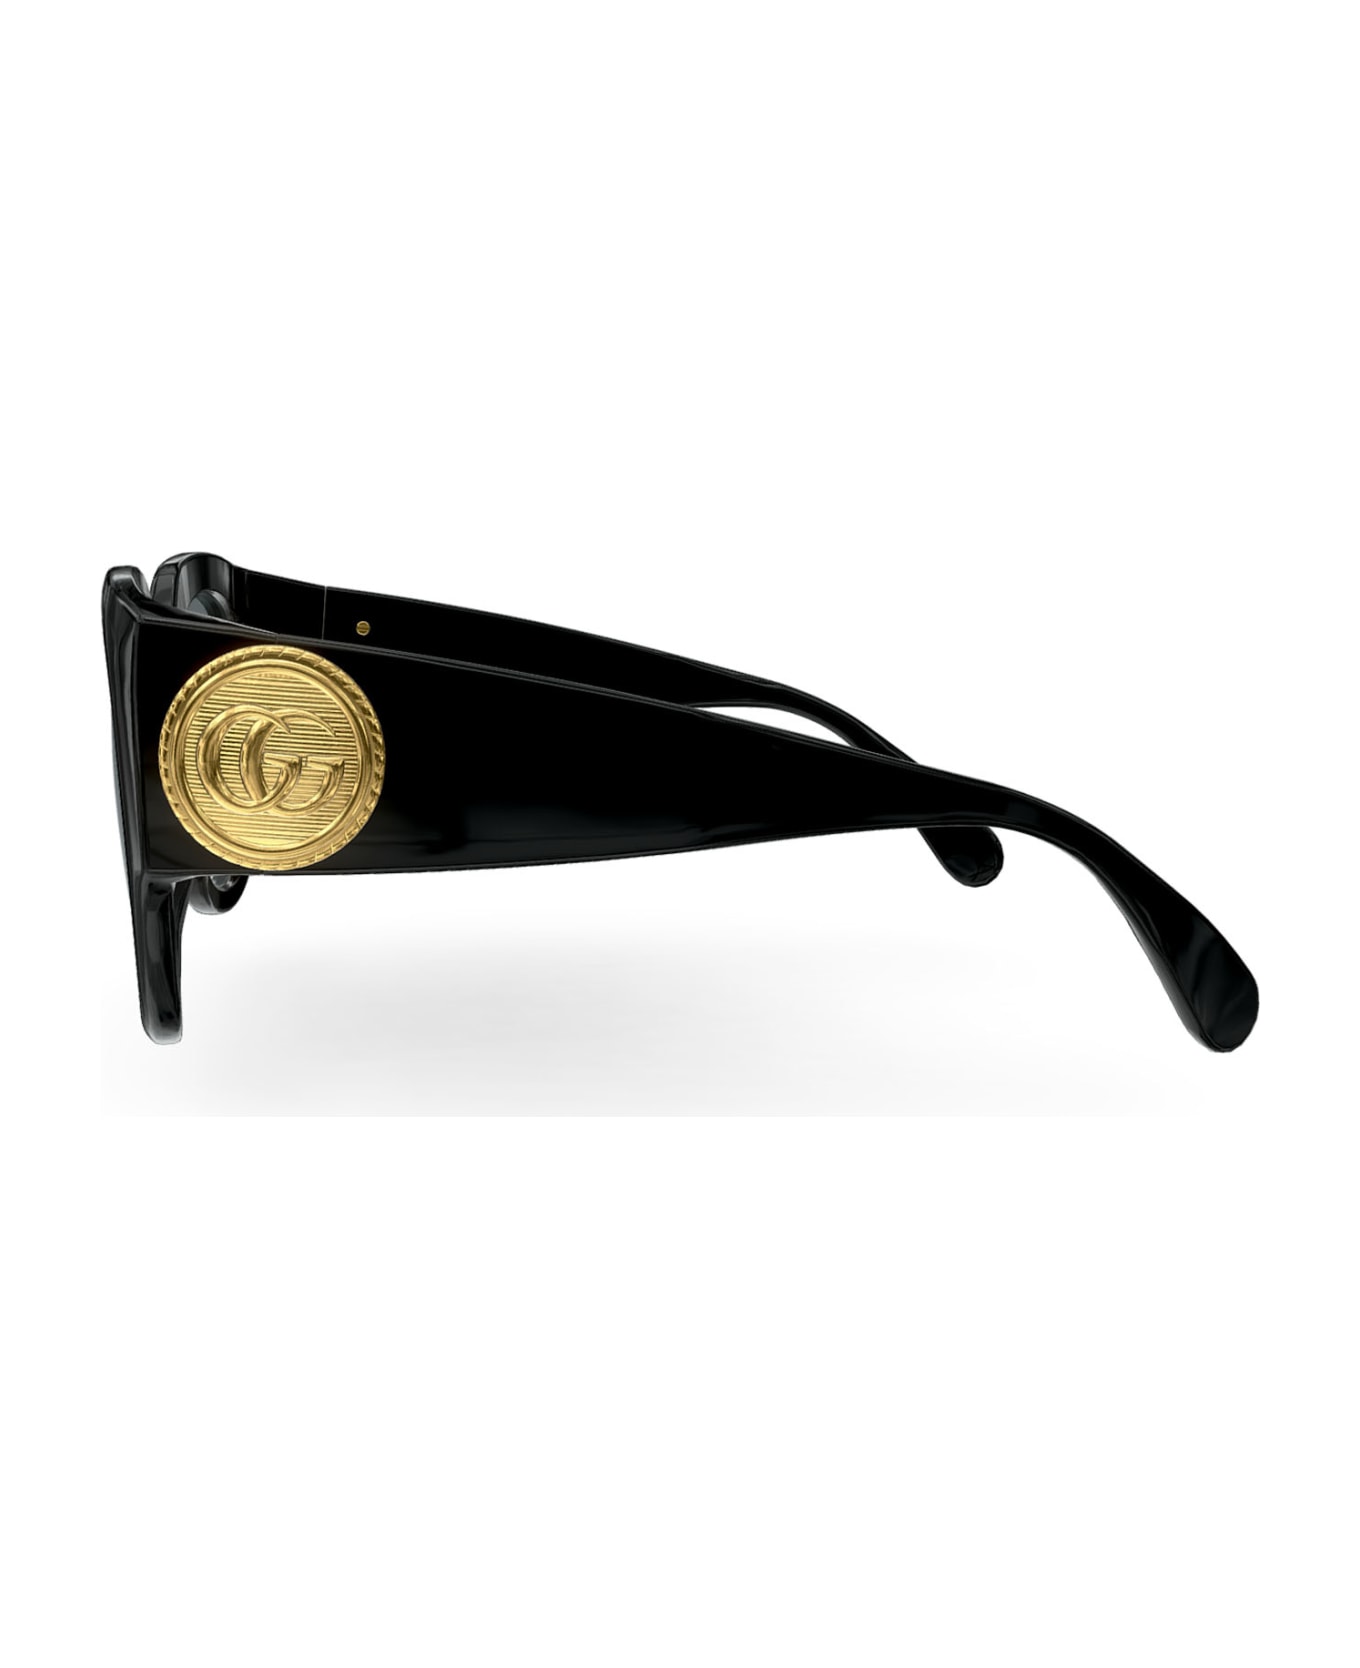 Gucci Eyewear GG1407S Sunglasses - Black Black Grey